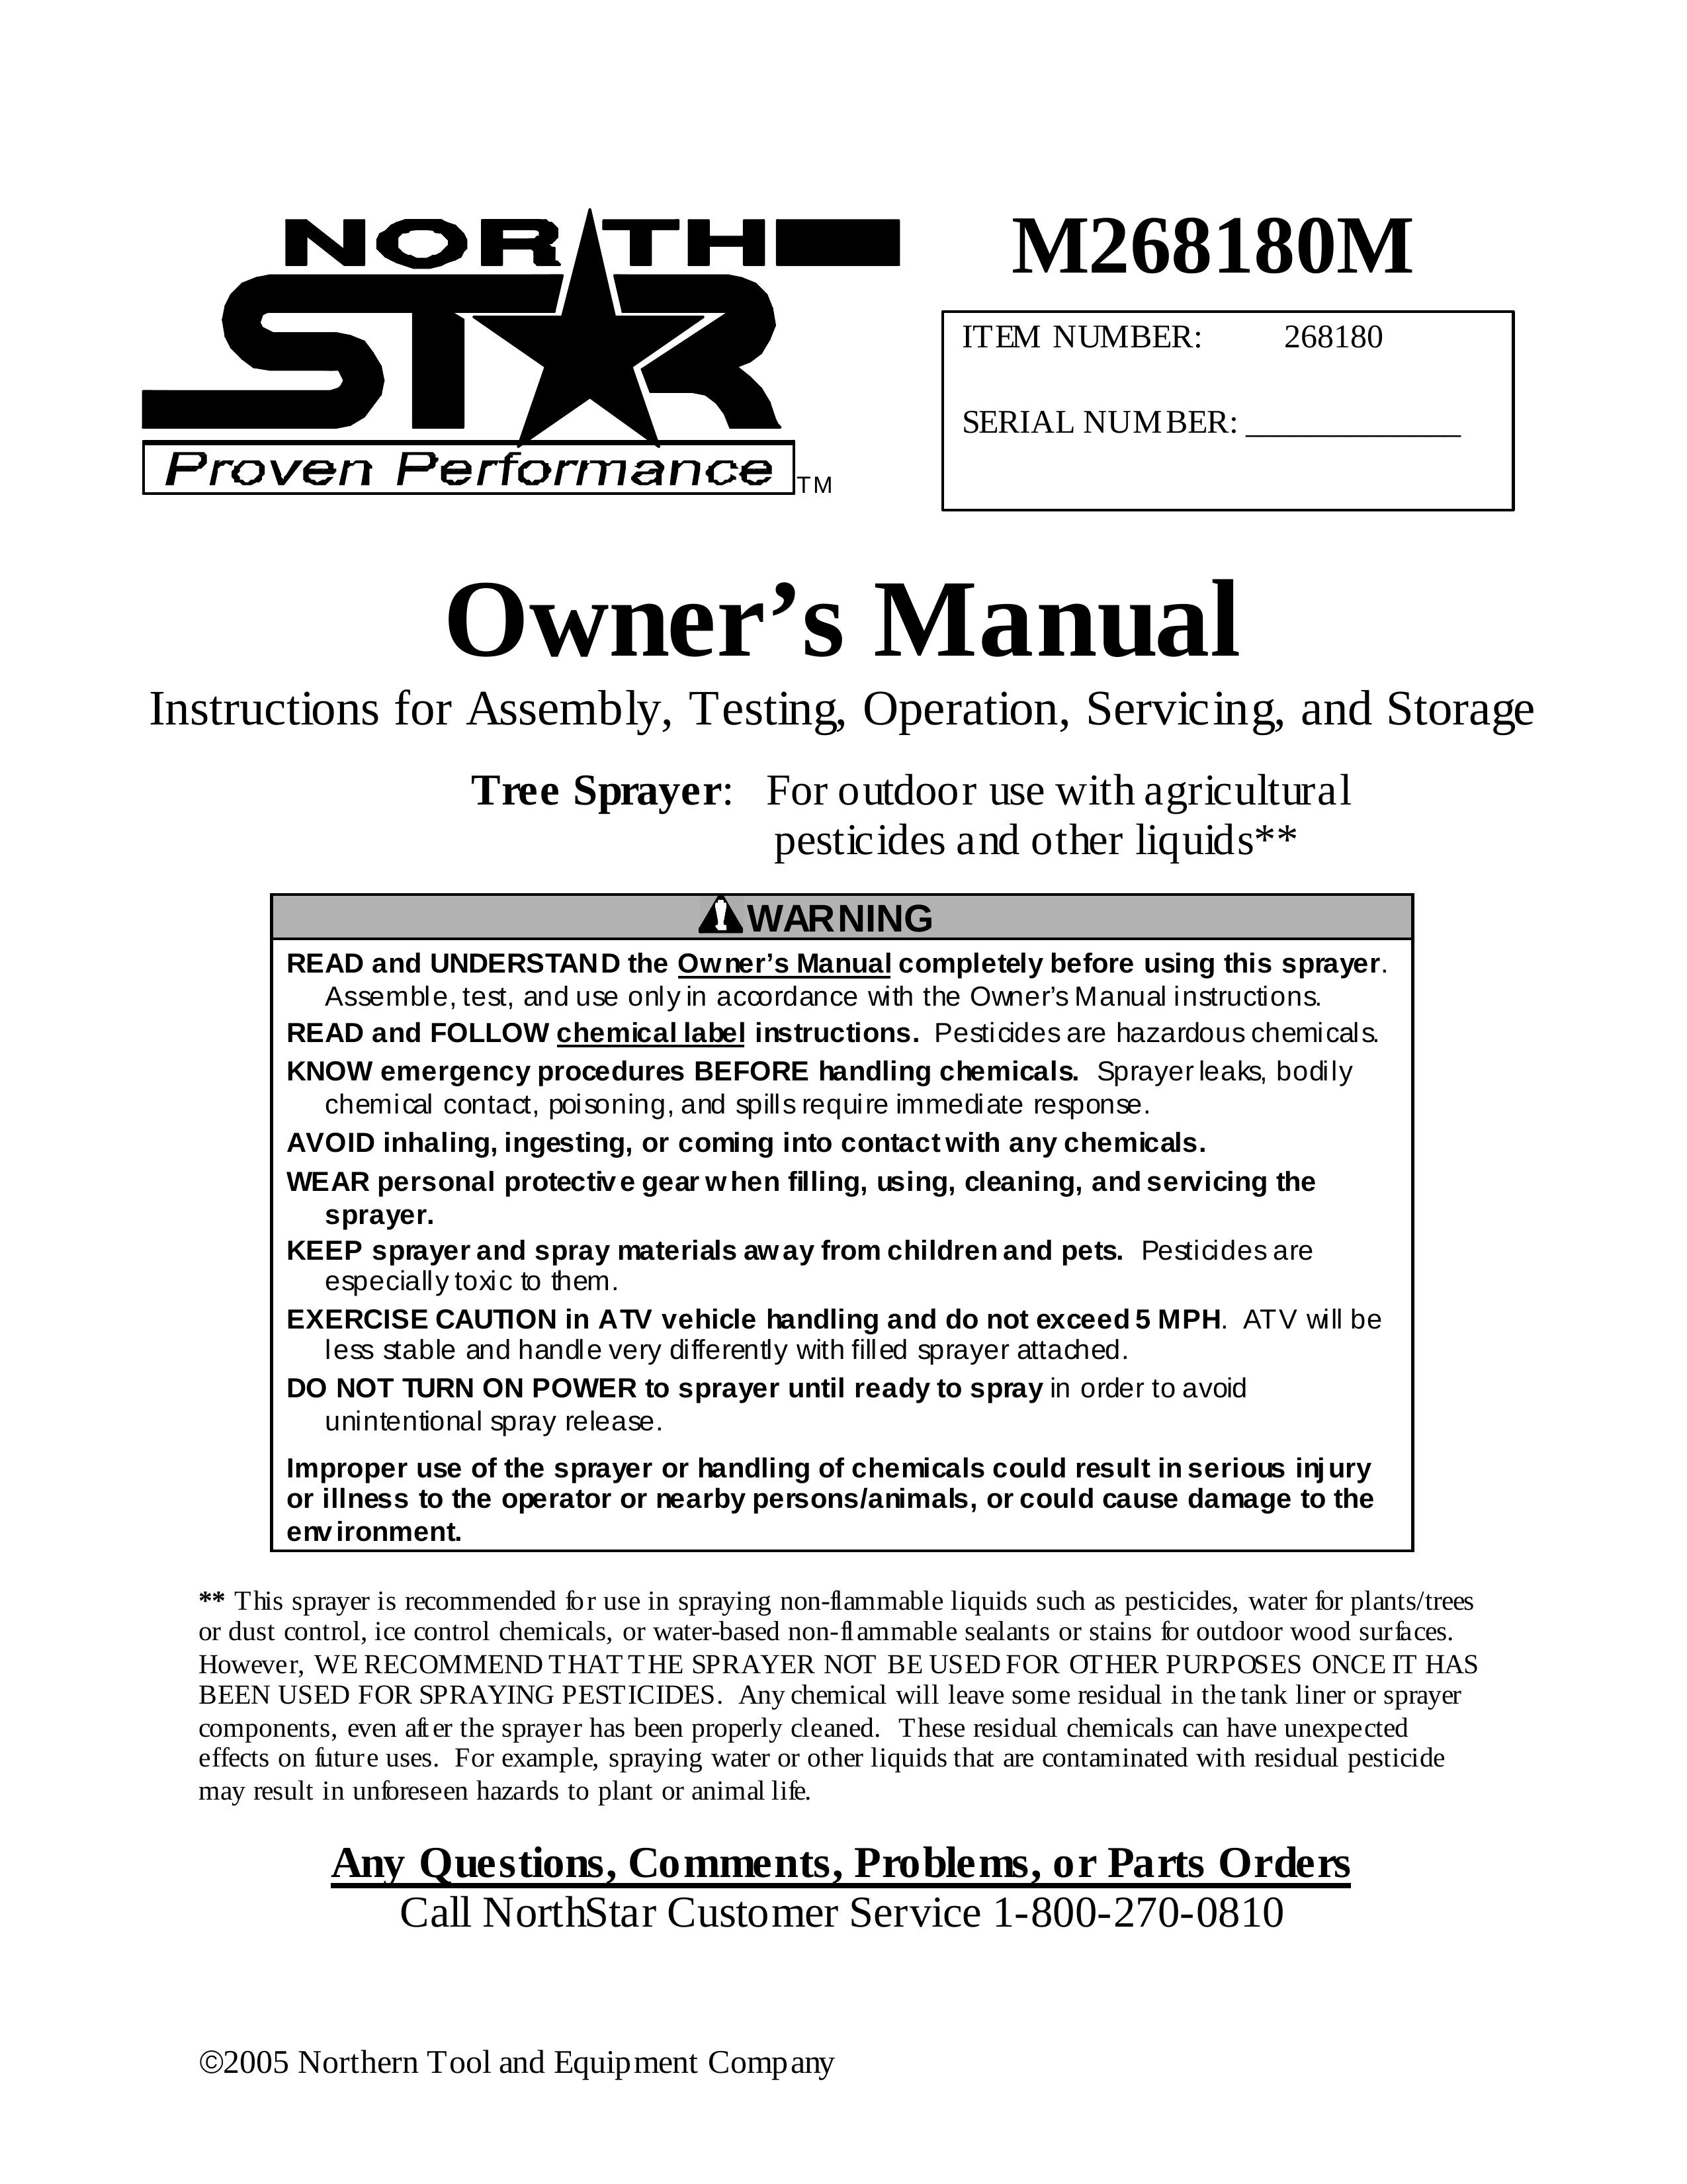 North Star M268180M Pest Control Equipment User Manual